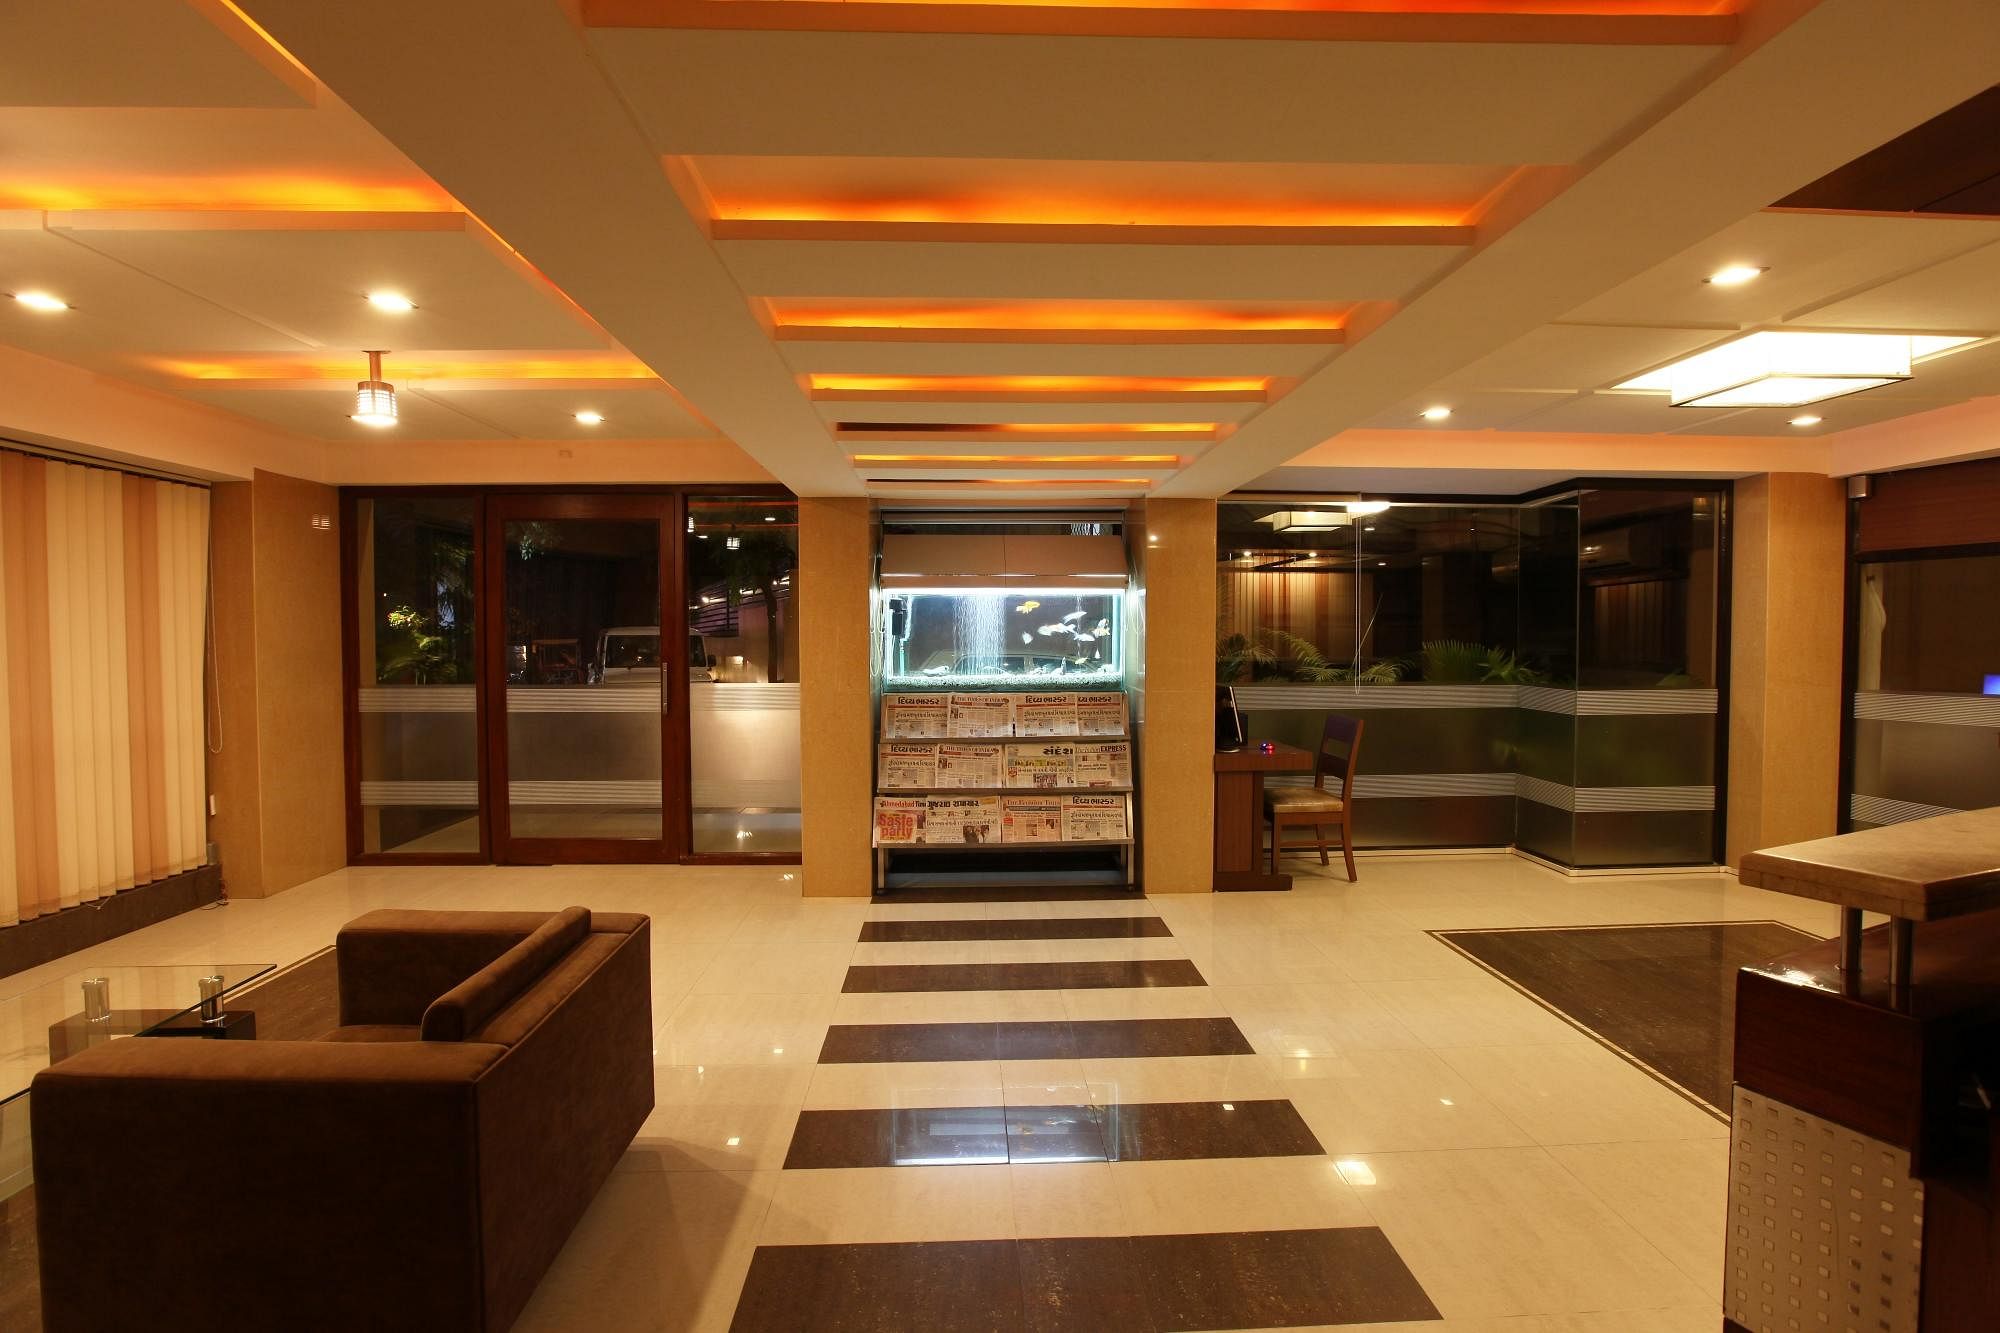 Hotel Accolade in Ellis Bridge, Ahmedabad